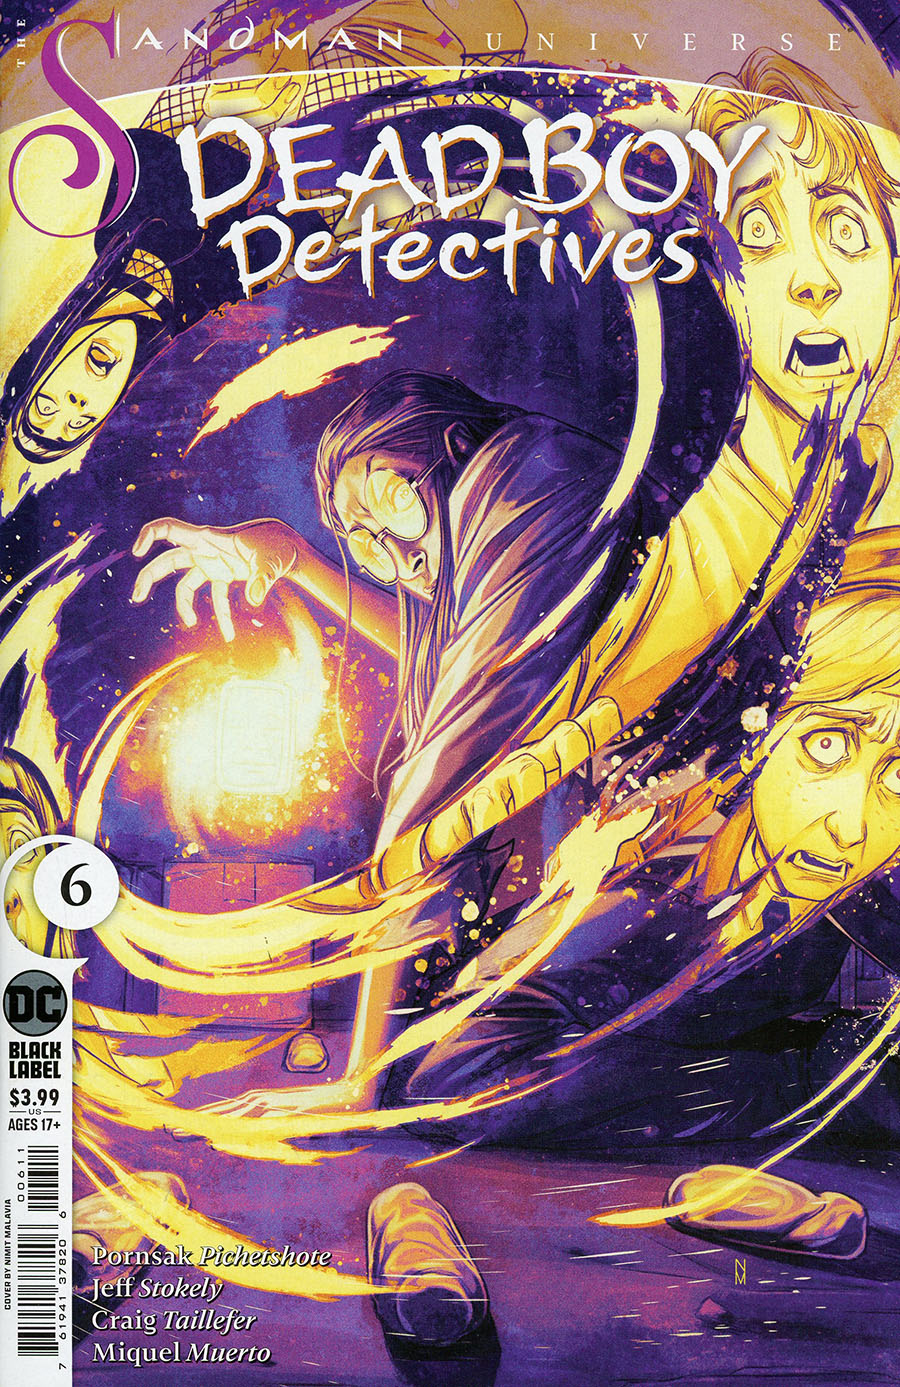 Sandman Universe Dead Boy Detectives #6 Cover A Regular Nimit Malavia Cover